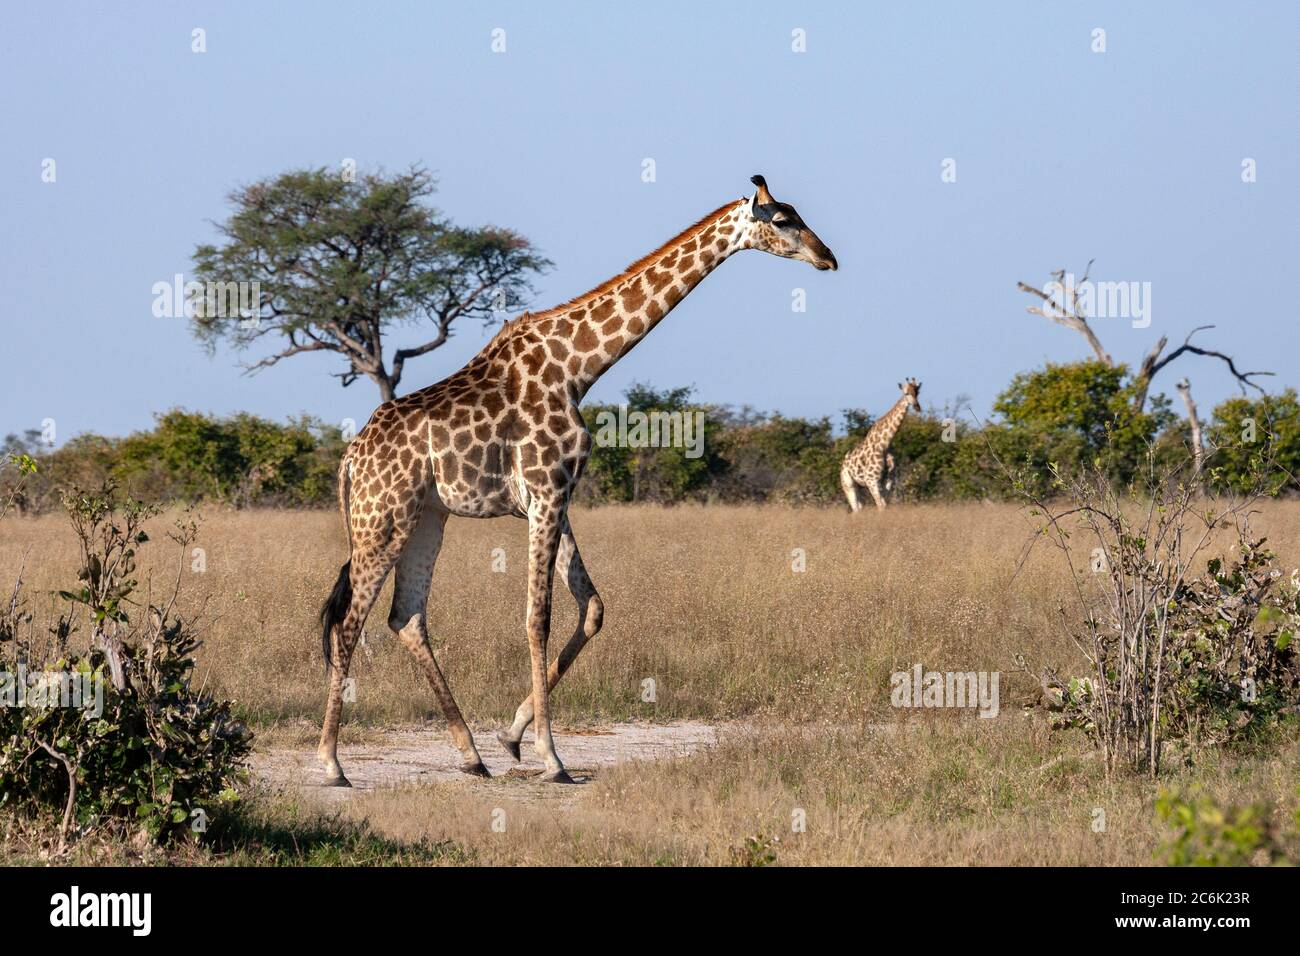 Giraffe (Giraffa camelopardalis) walking in the Savuti region of northern Botswana, Africa. The Giraffe is the tallest living terrestrial animal and t Stock Photo